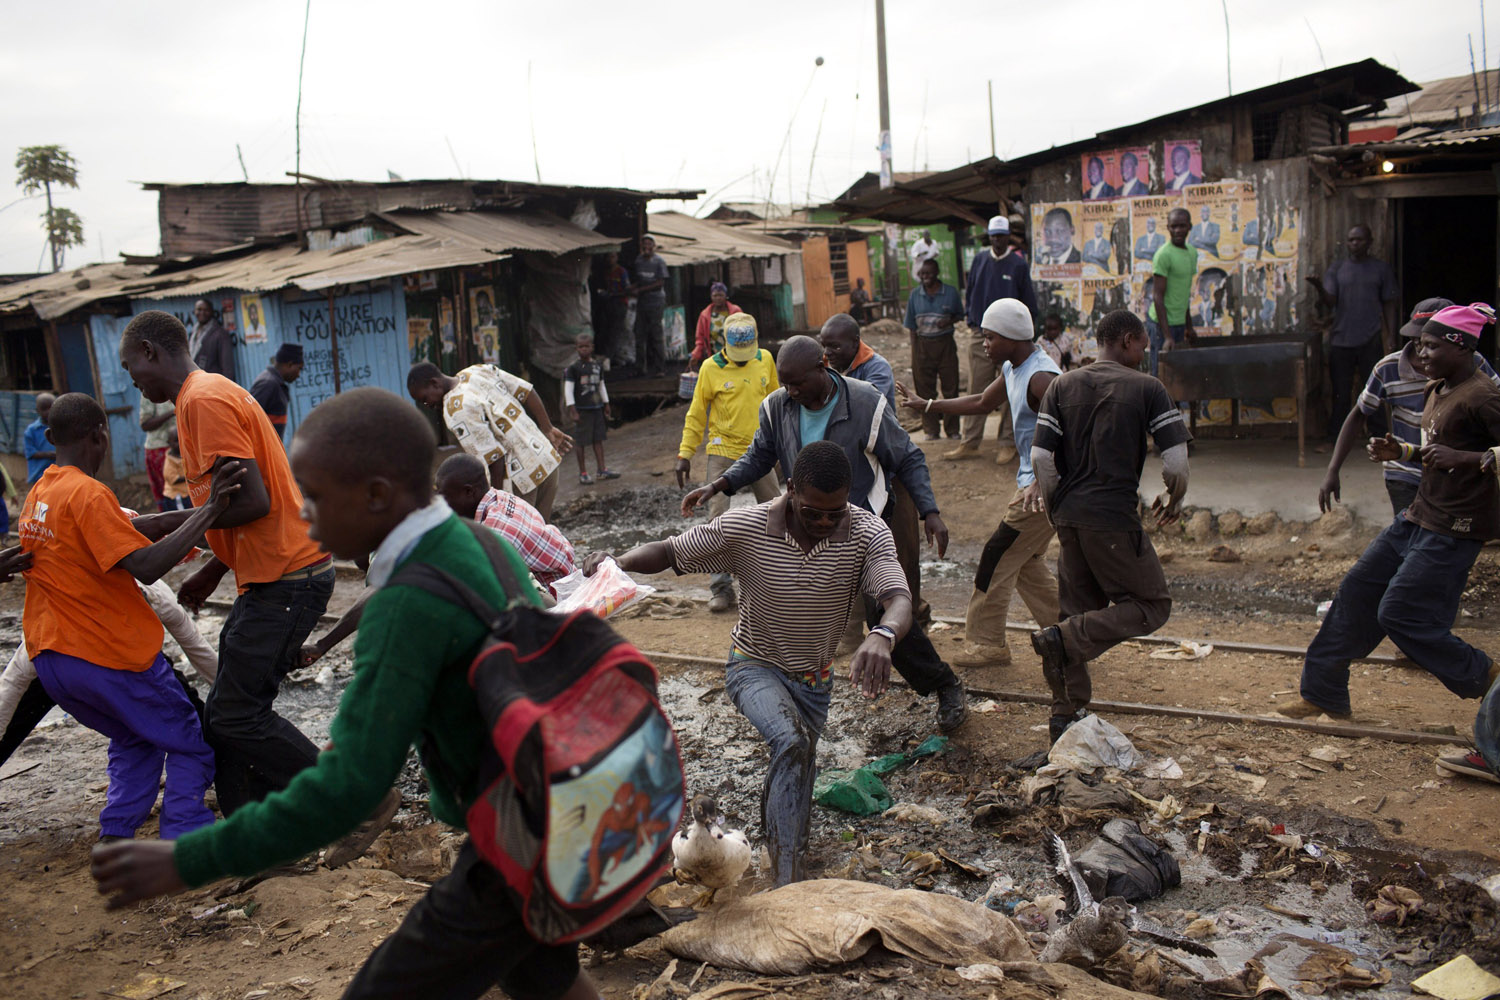 Feb. 27, 2013. Men scramble to get hold of t-shirts of the Orange Democratic Movement (ODM) during a campaign in Kibera slum in Nairobi, Kenya.